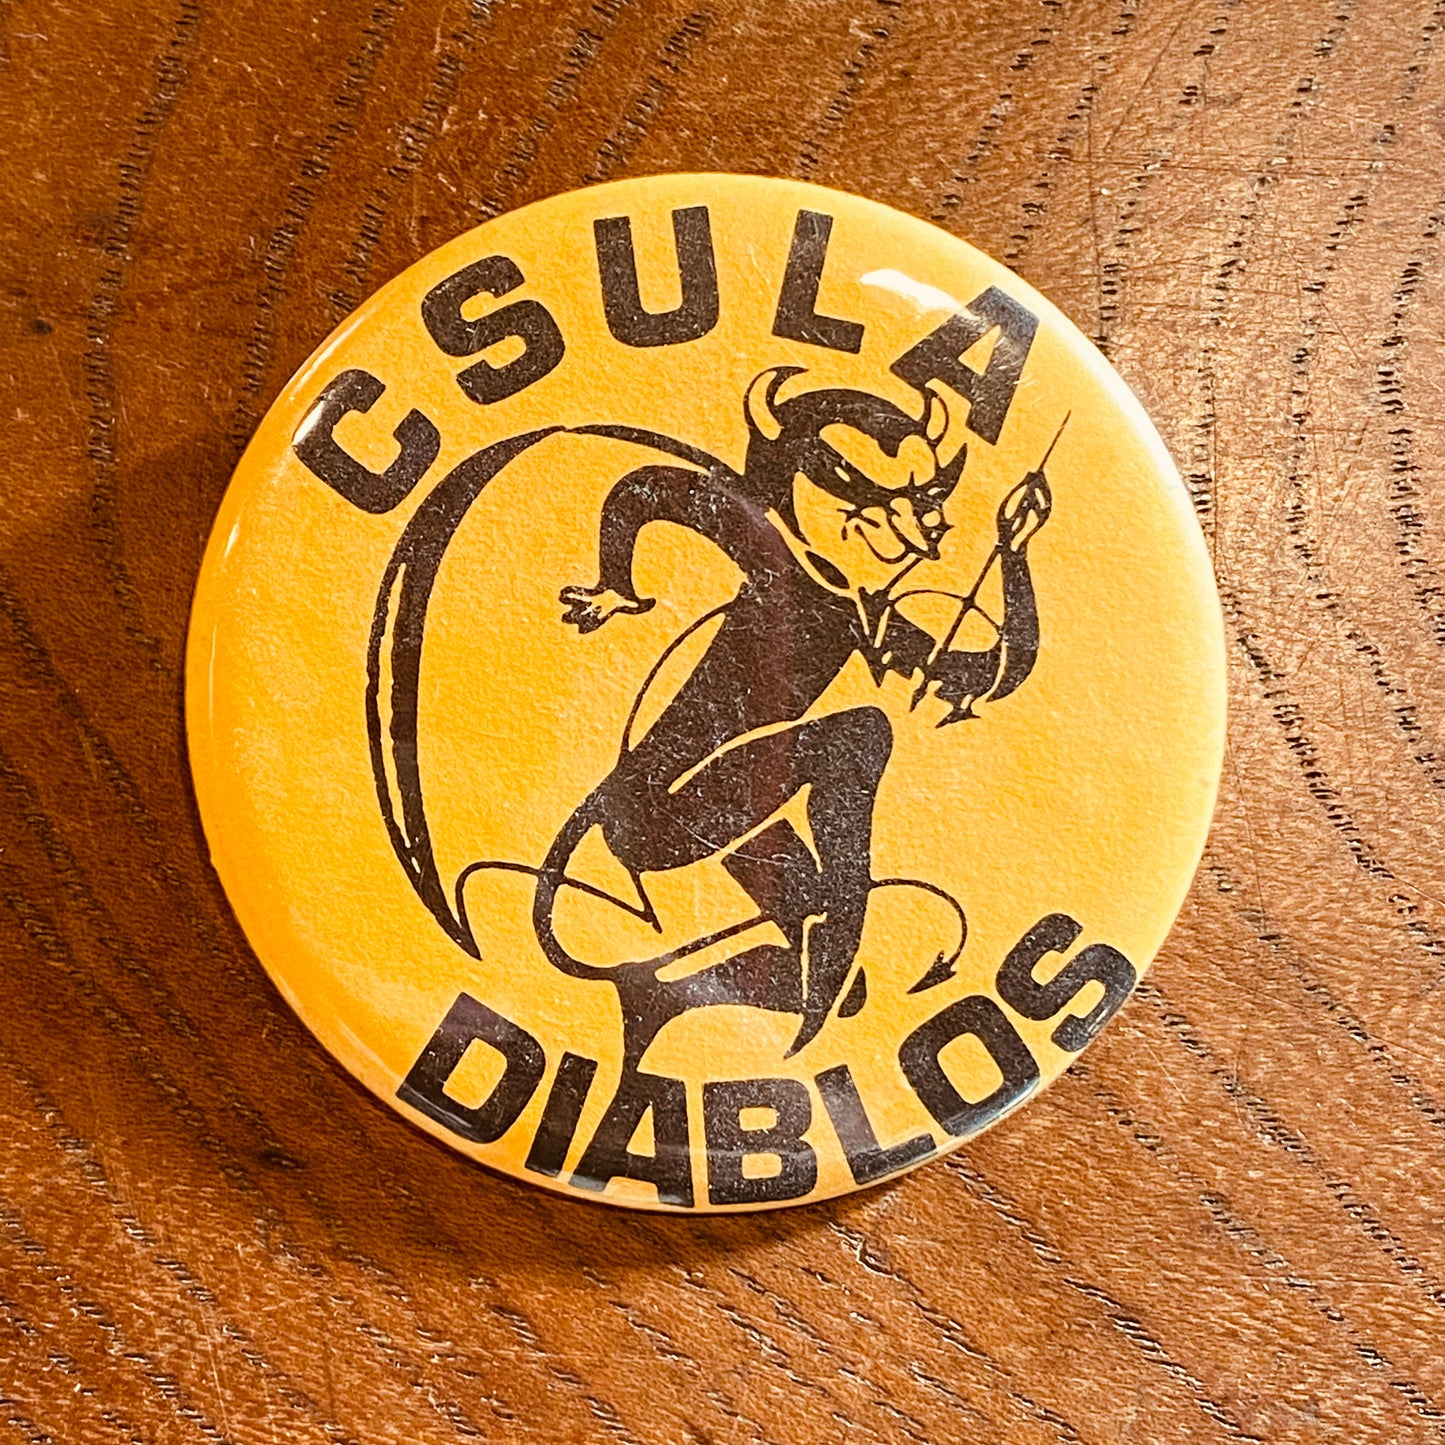 【USA vintage】缶バッジ CSULA DIABLOS 悪魔